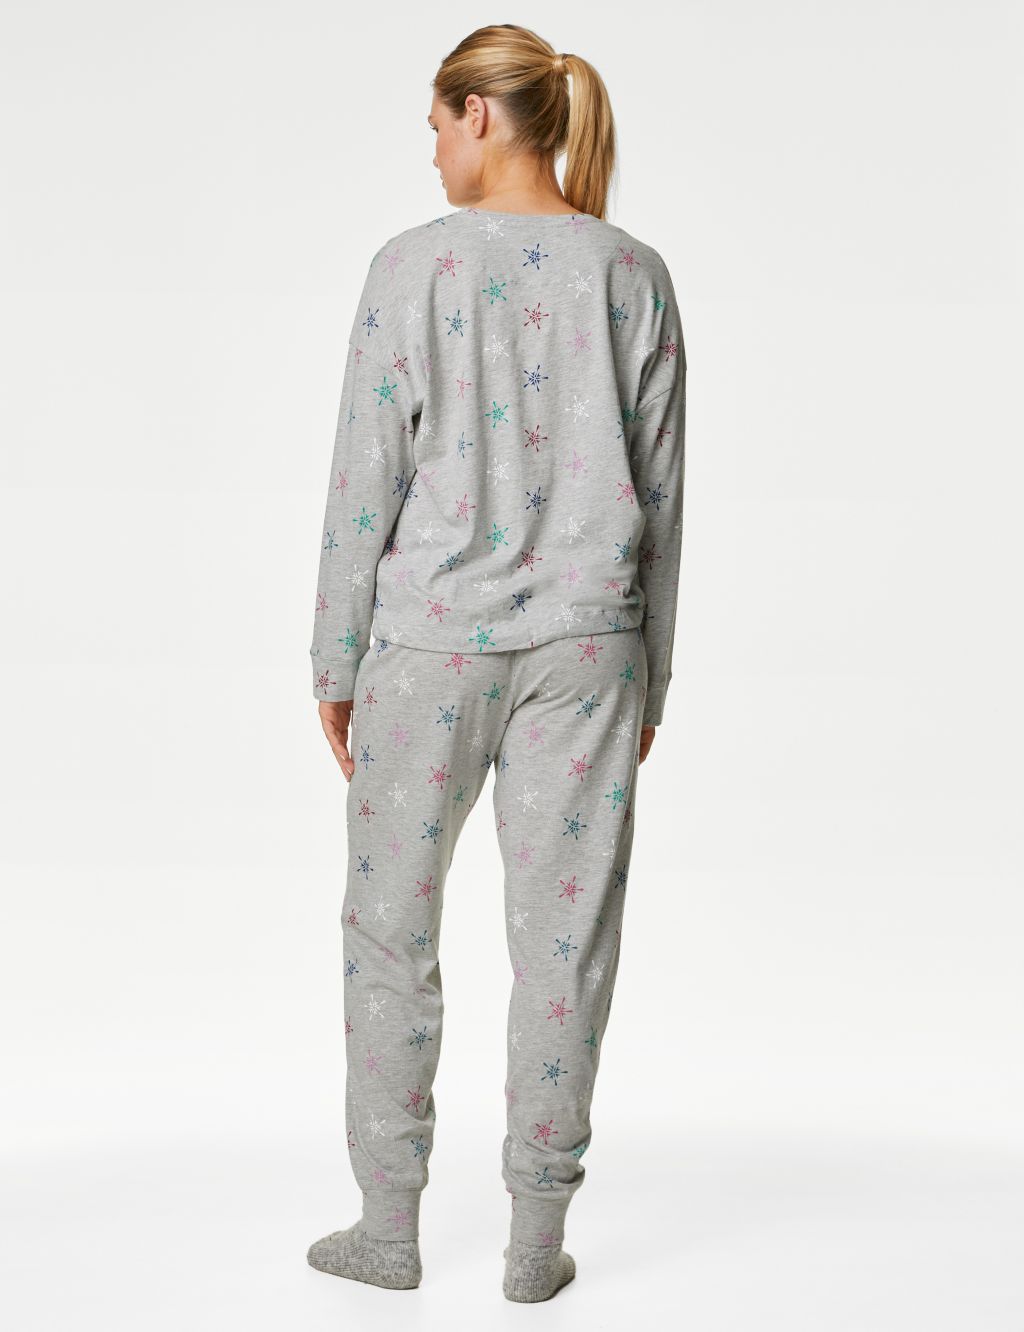 Cotton Rich Star Print Pyjama Set image 5